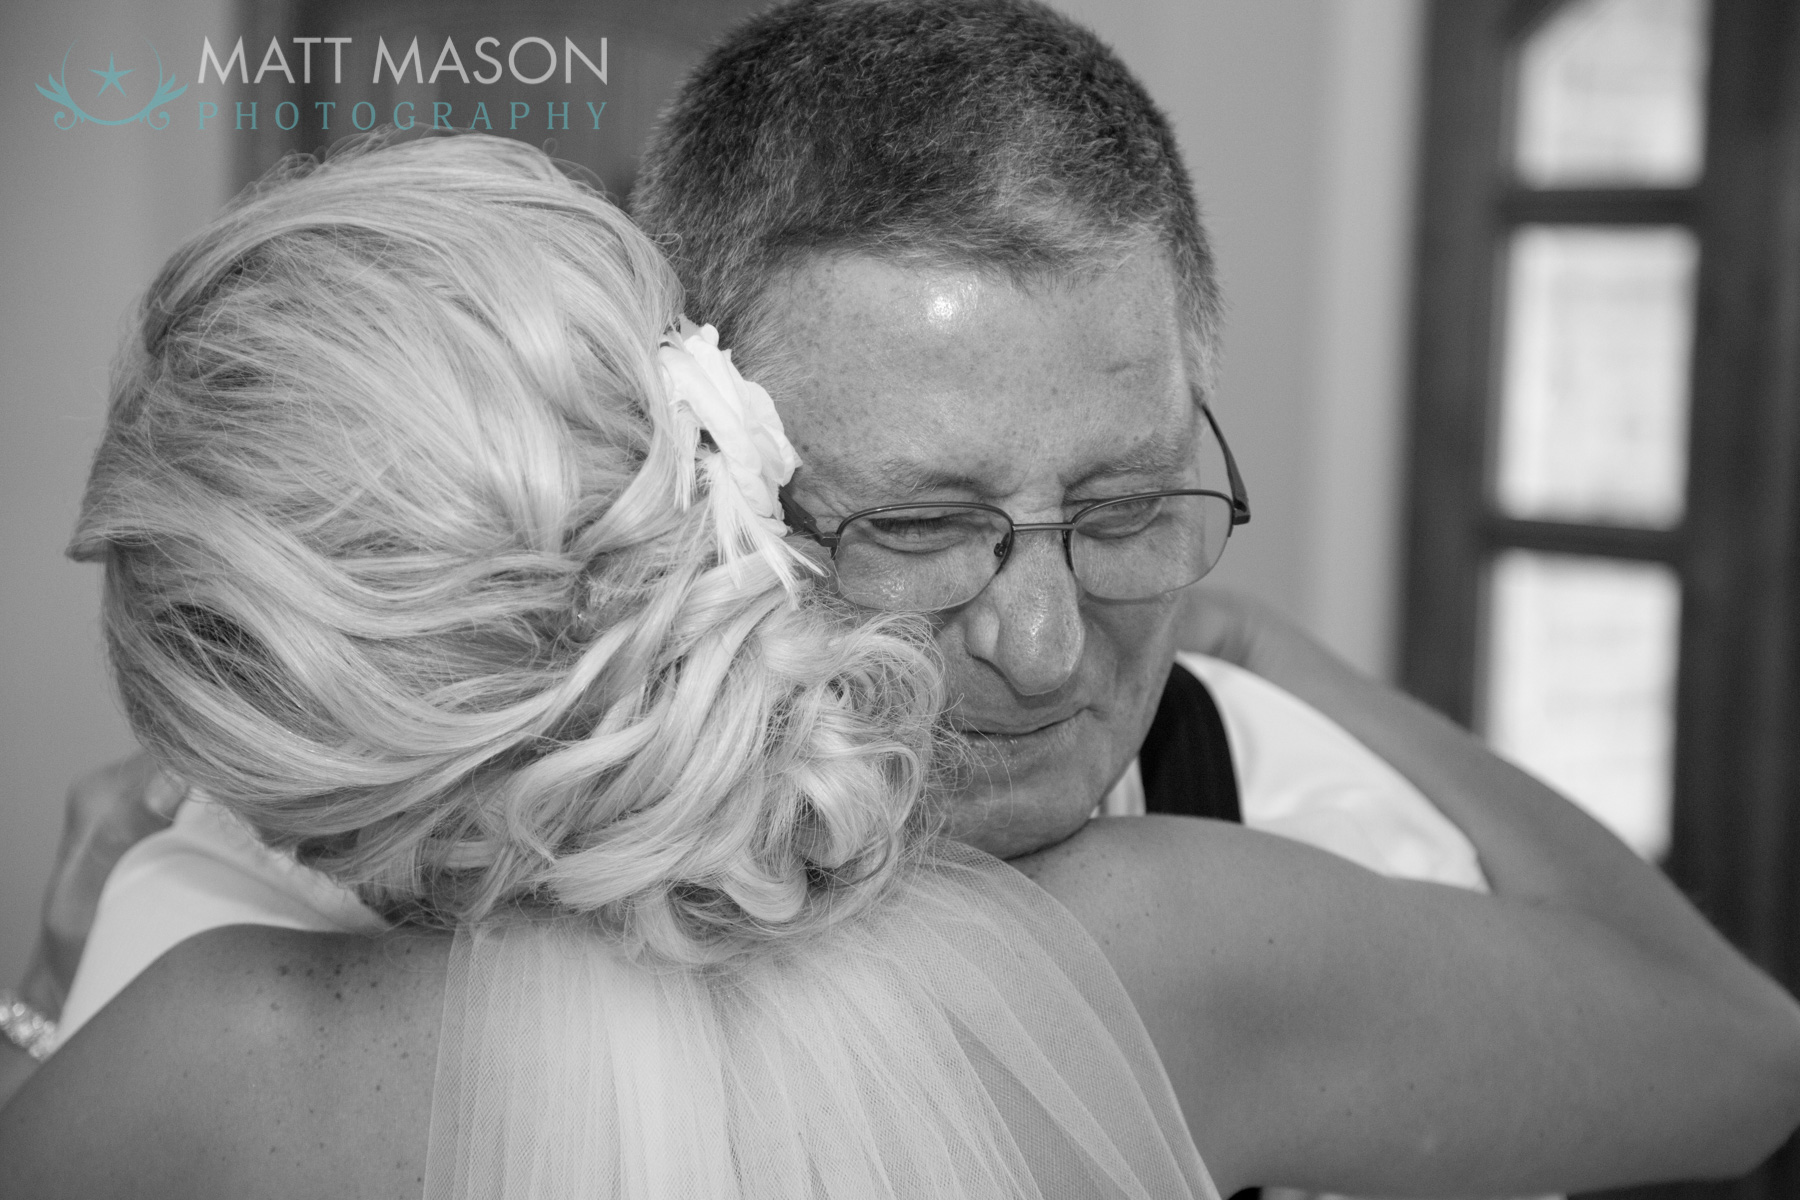 Matt-Mason-Photography-Father-Daughter-MattMasonPhotography-2.jpg